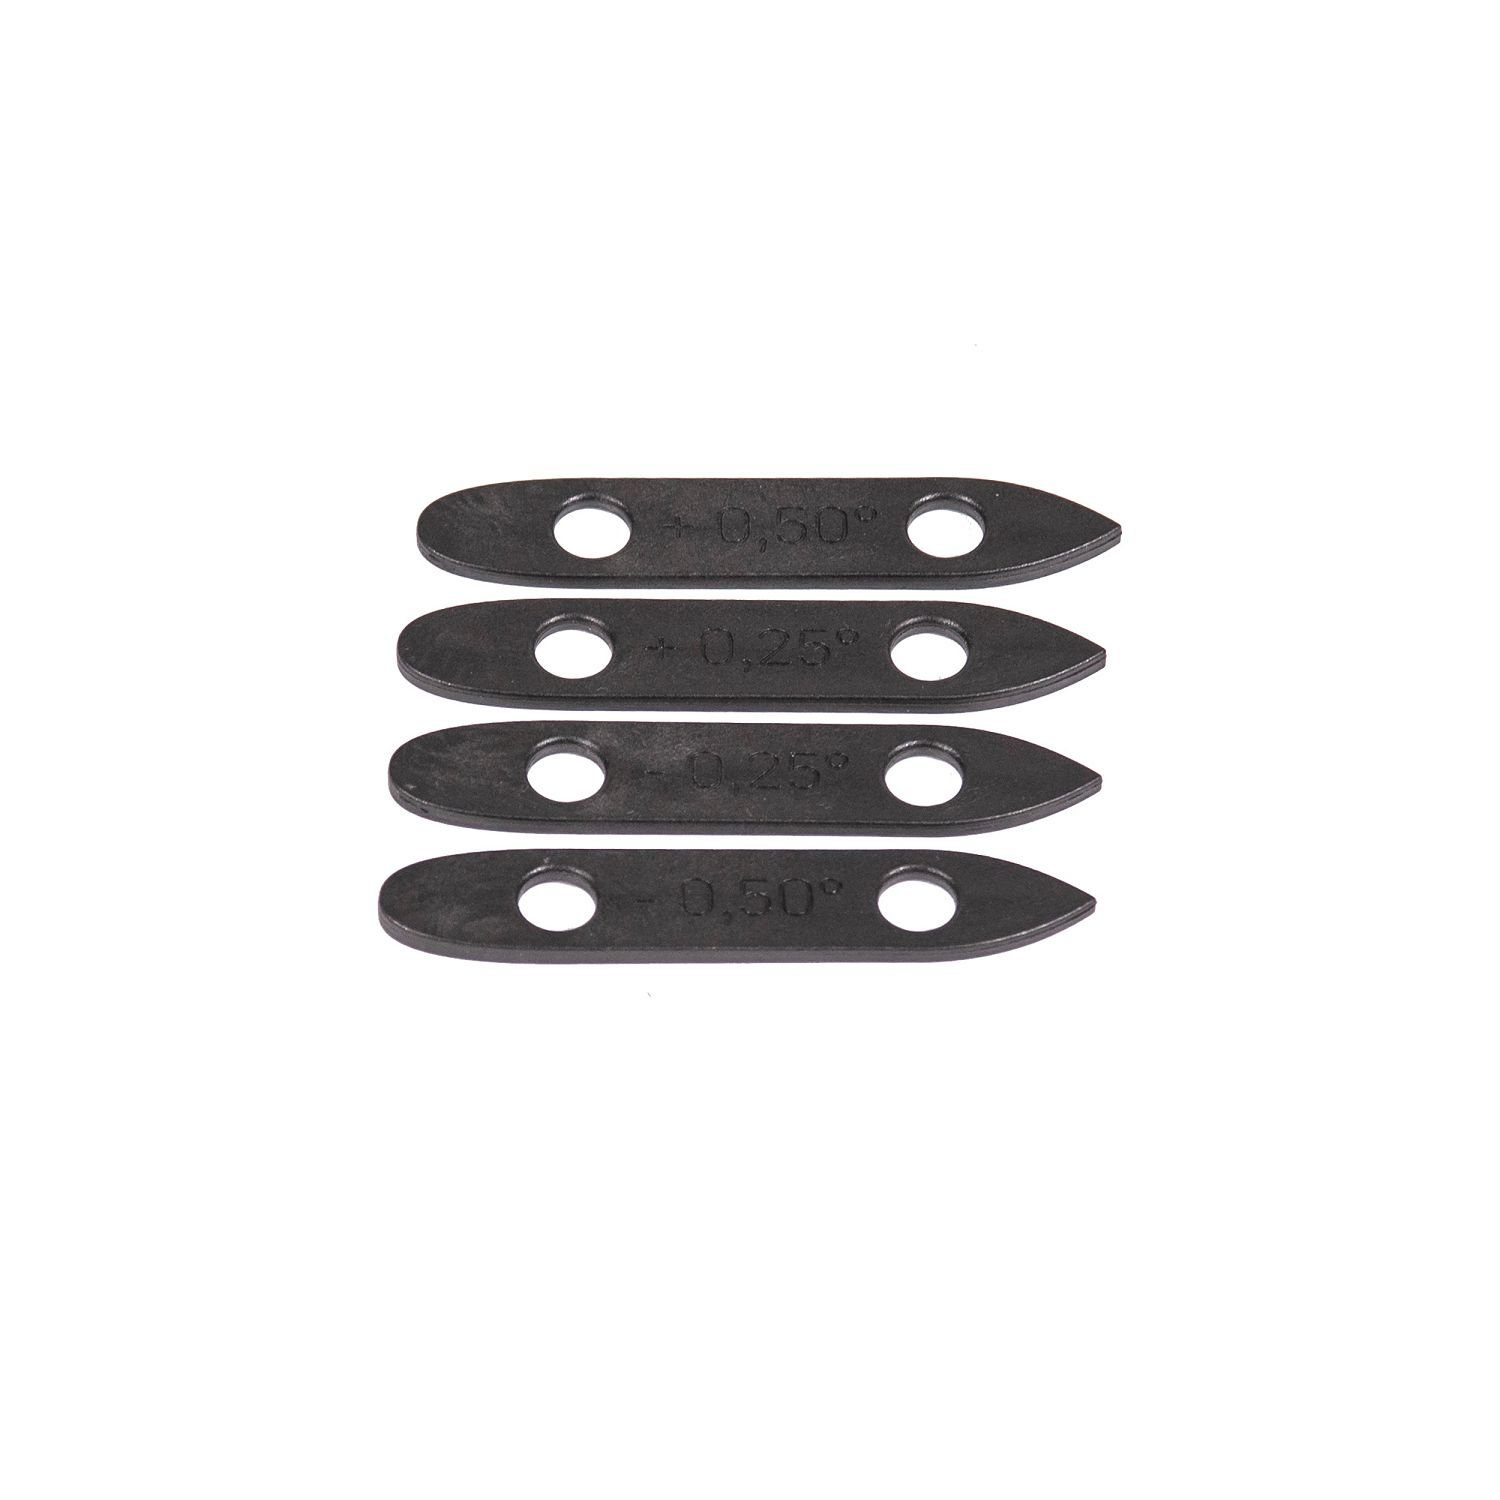 Fanatic SUP-Board Fanatic Foil Parts black Wedge Foil Set (4pcs)